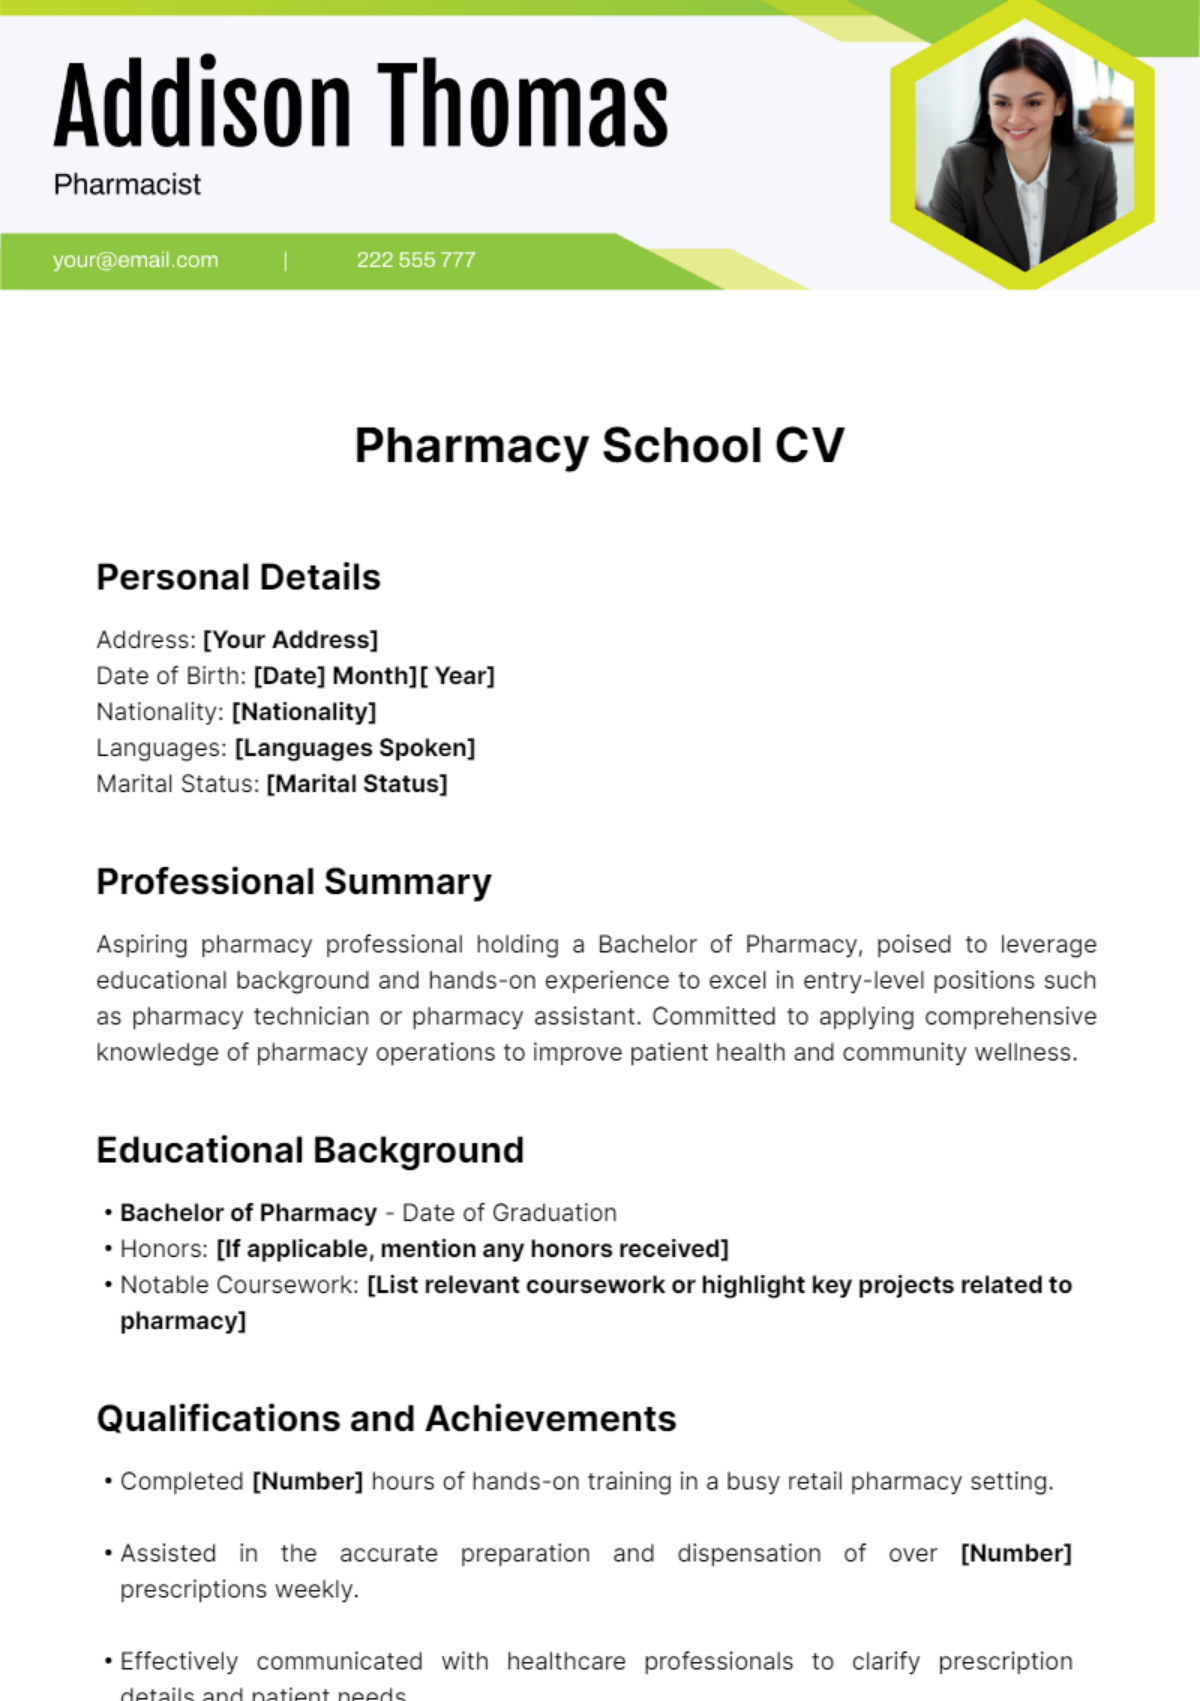 Pharmacy School CV Template